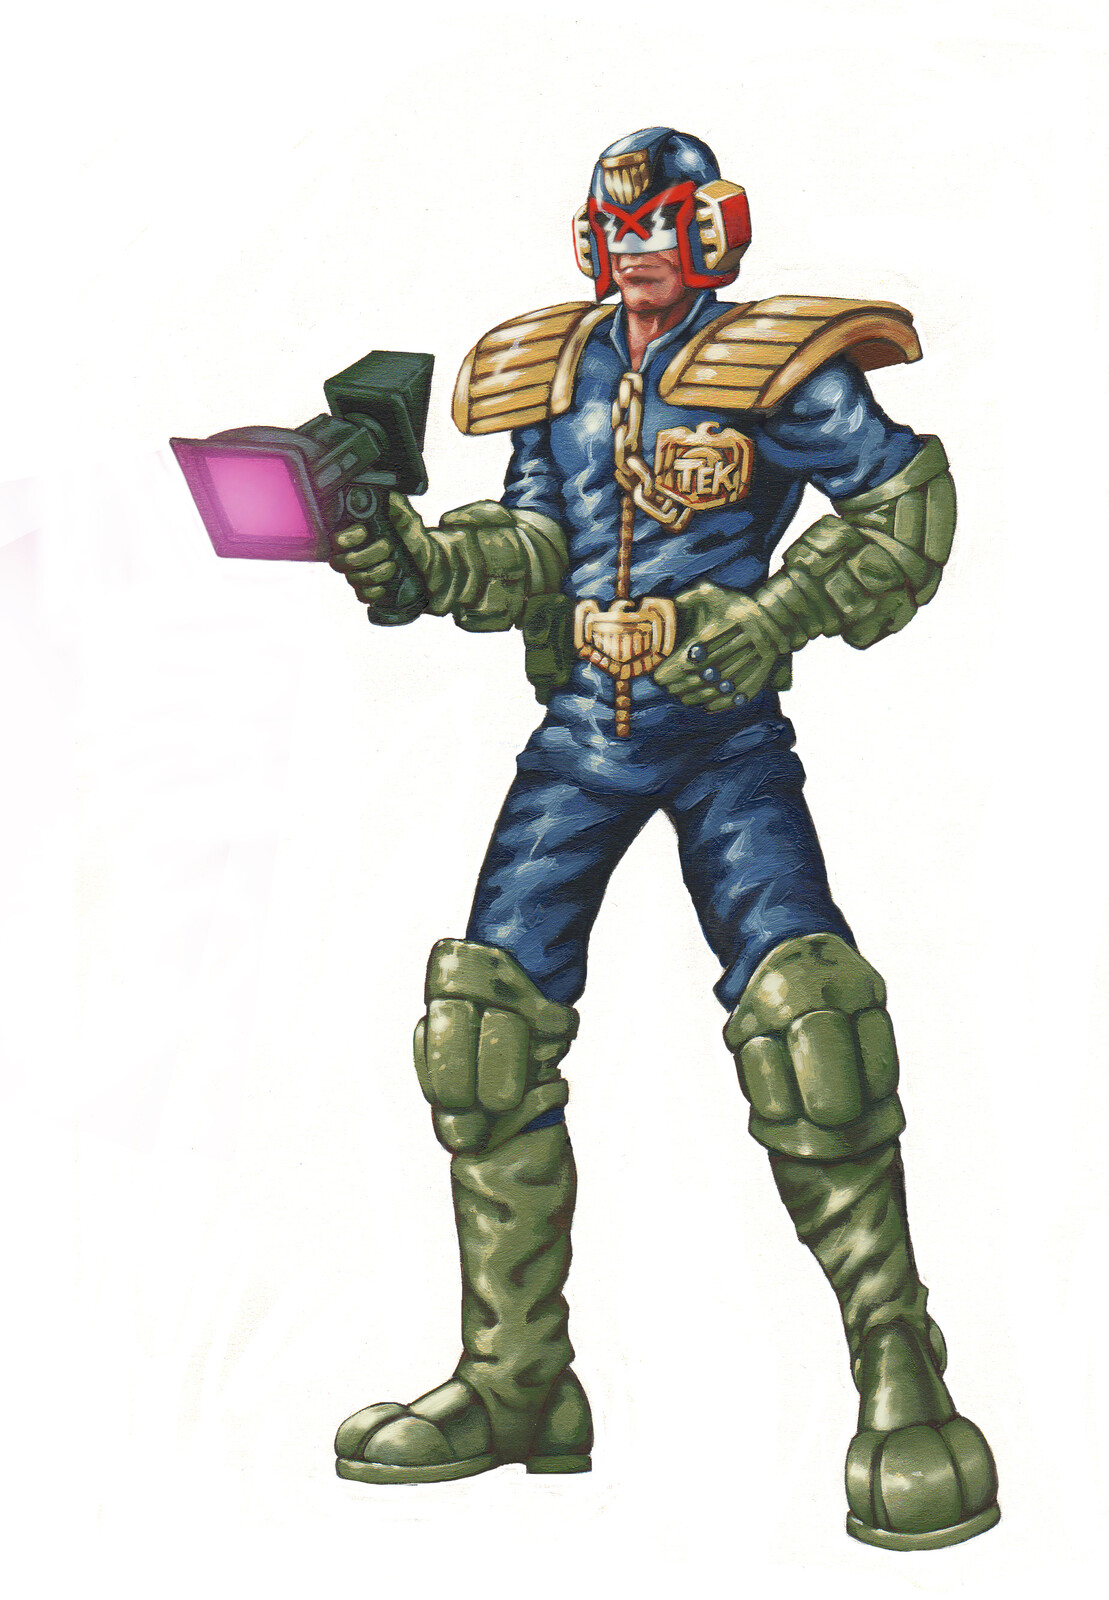 Character design
Judge Dredd, Mongoose Publishing